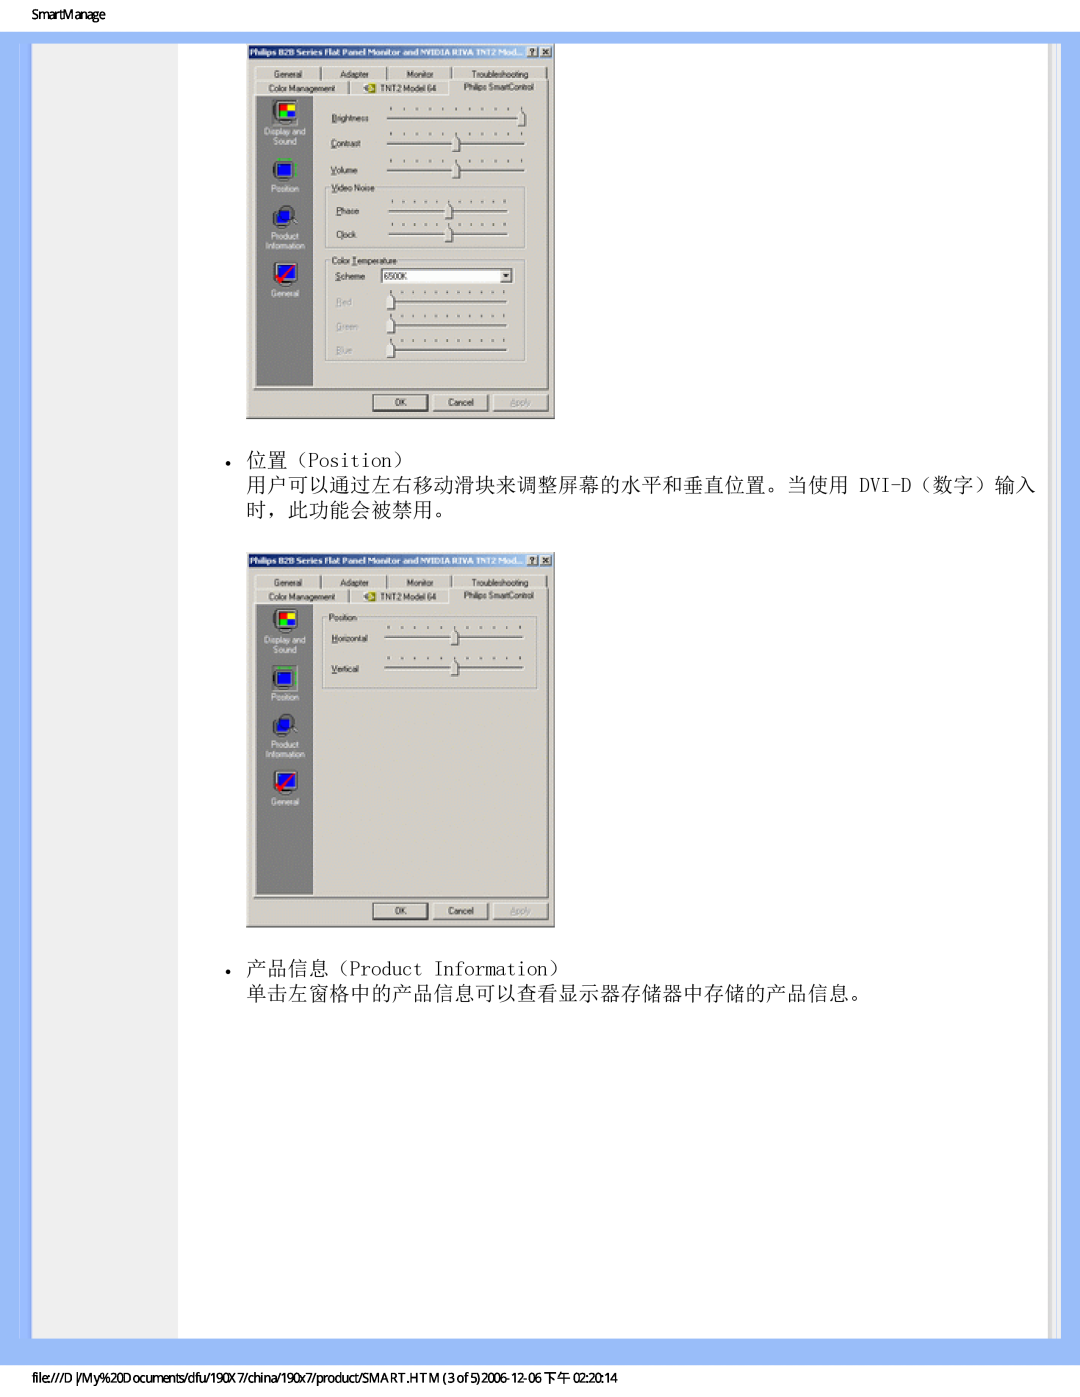 Philips 190X7 user manual 位置（Position）, 产品信息（Product Information）, 单击左窗格中的产品信息可以查看显示器存储器中存储的产品信息。, SmartManage 